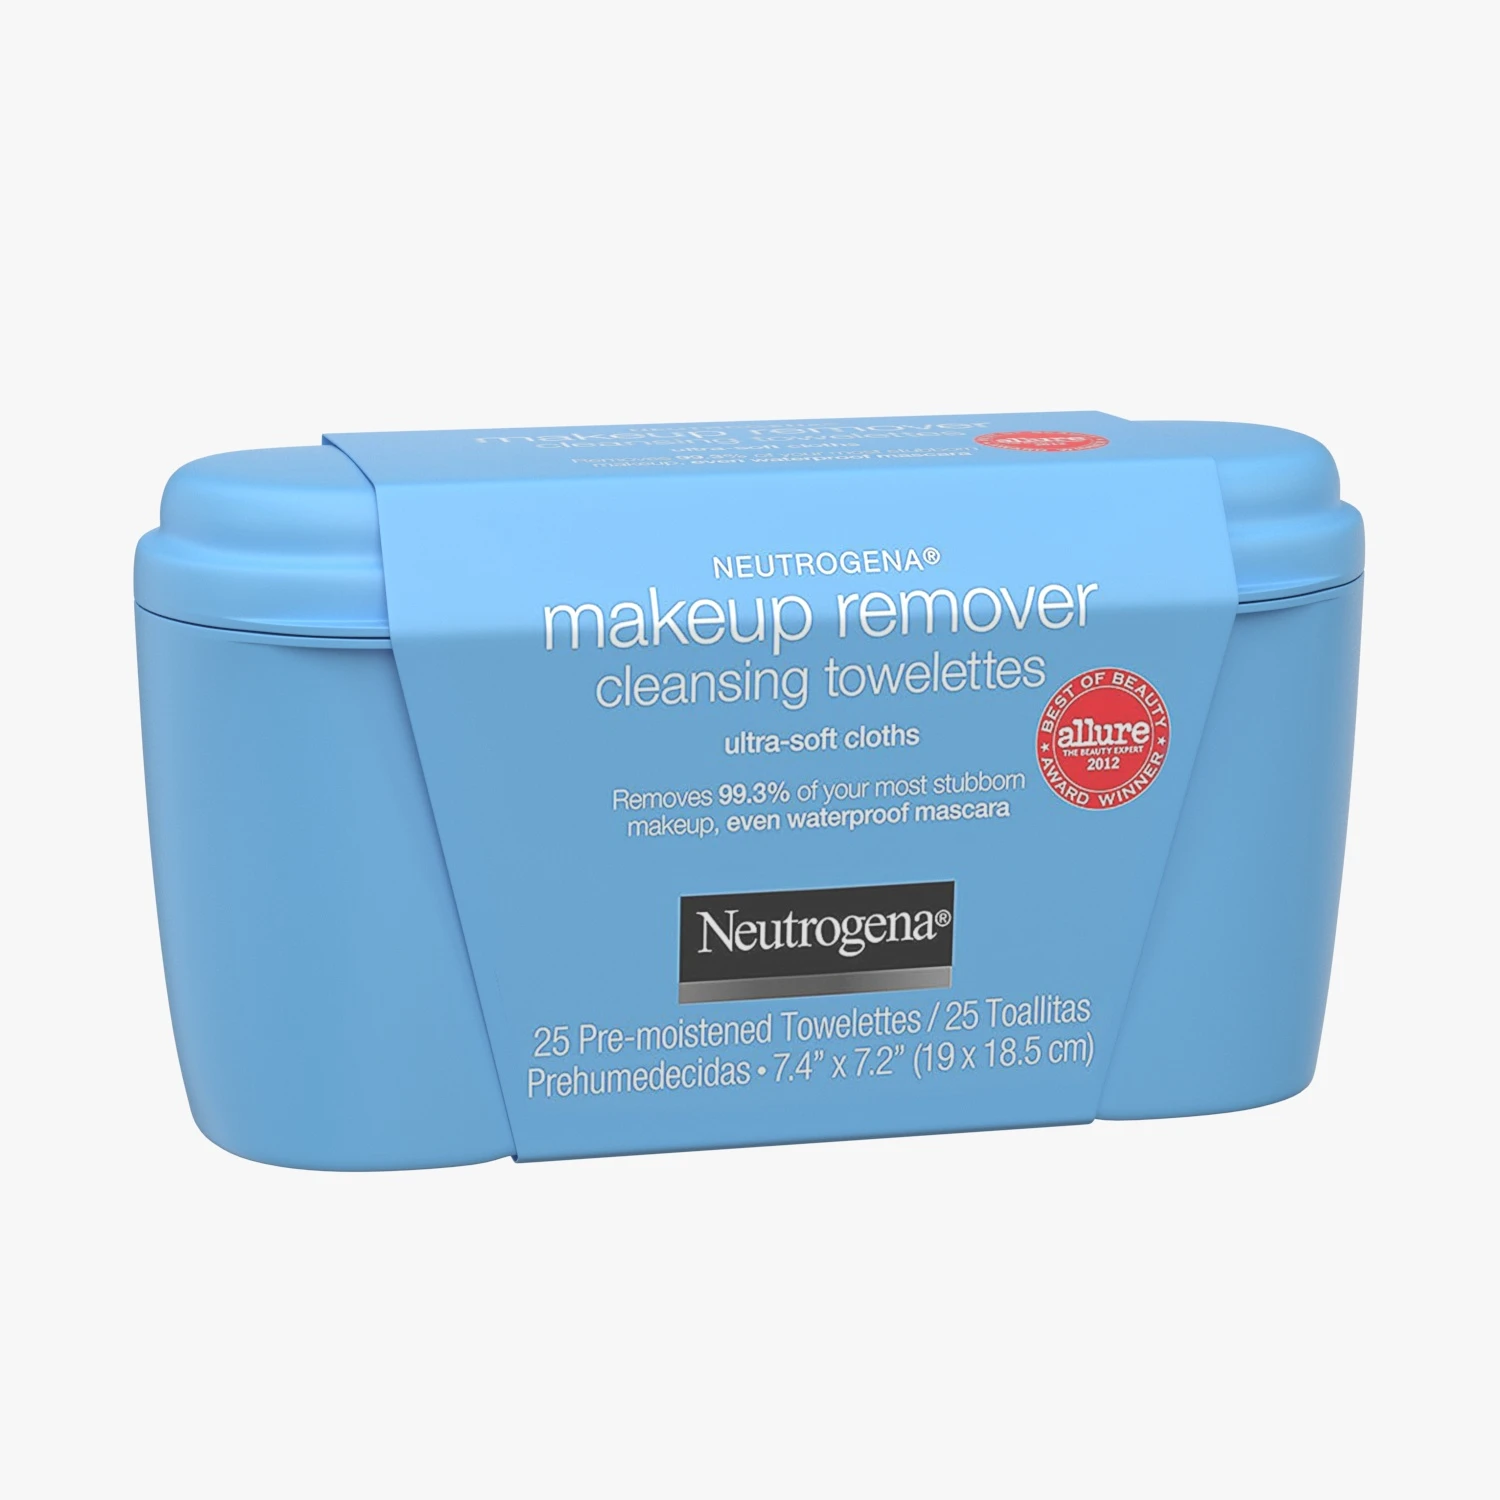 Neutrogena Makeup Remover Facial Cleansing Towelettes 3D Model_01